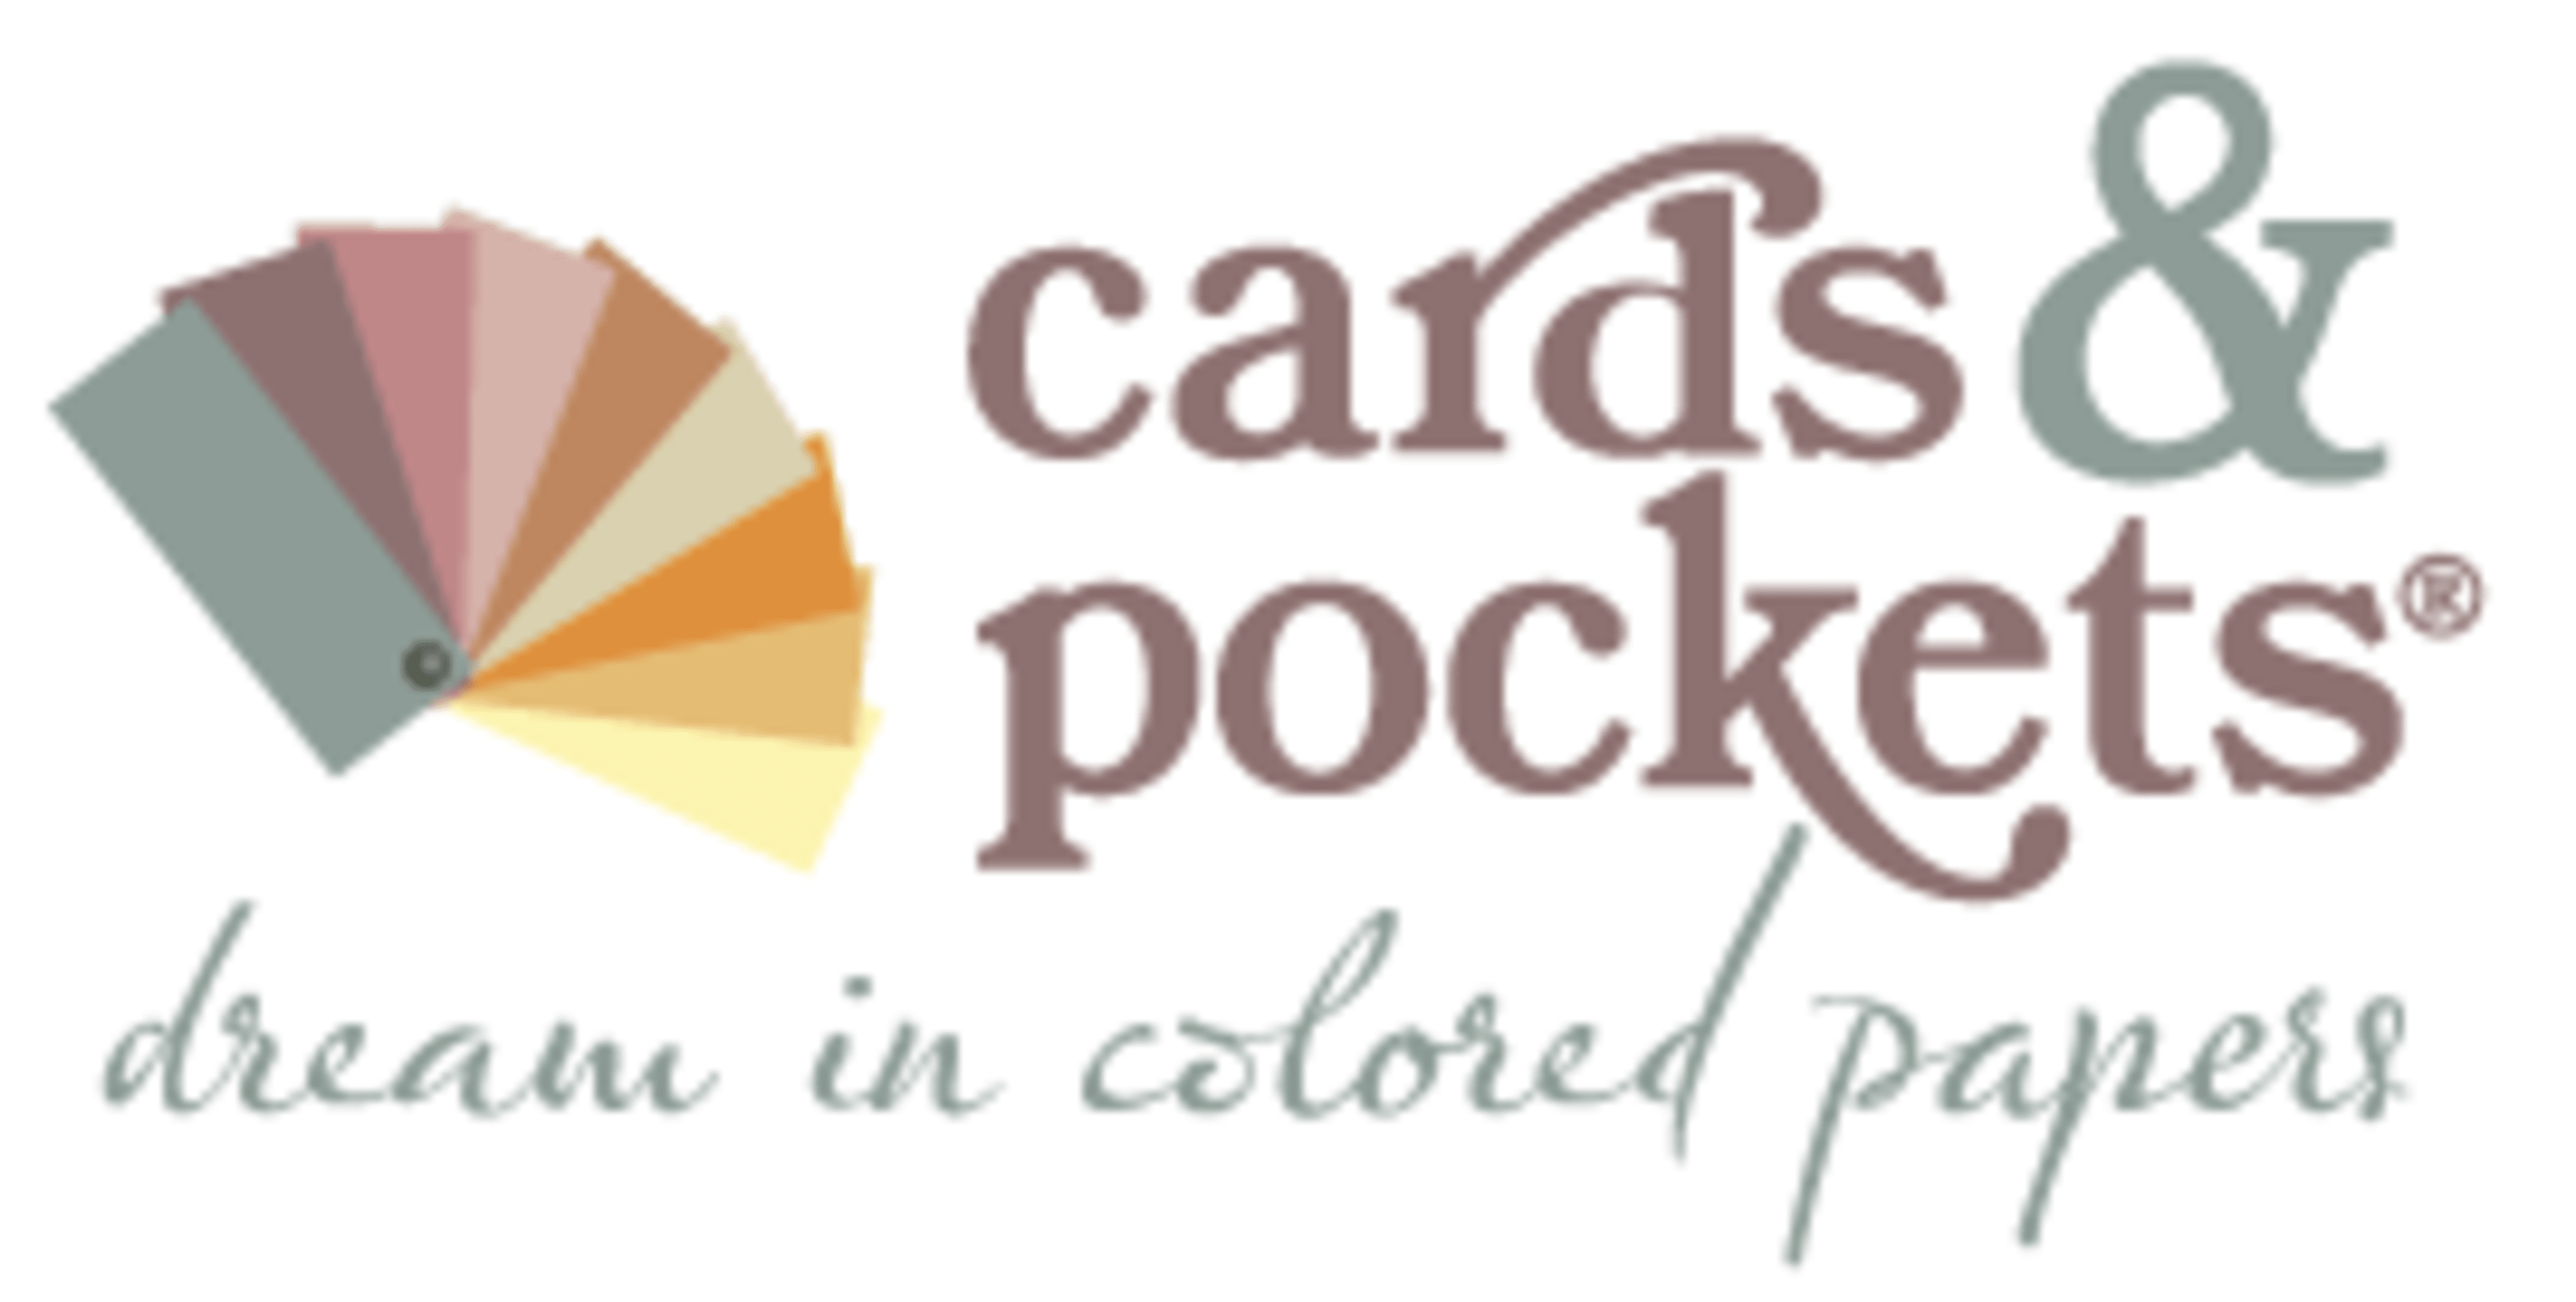 Cards & Pockets Code